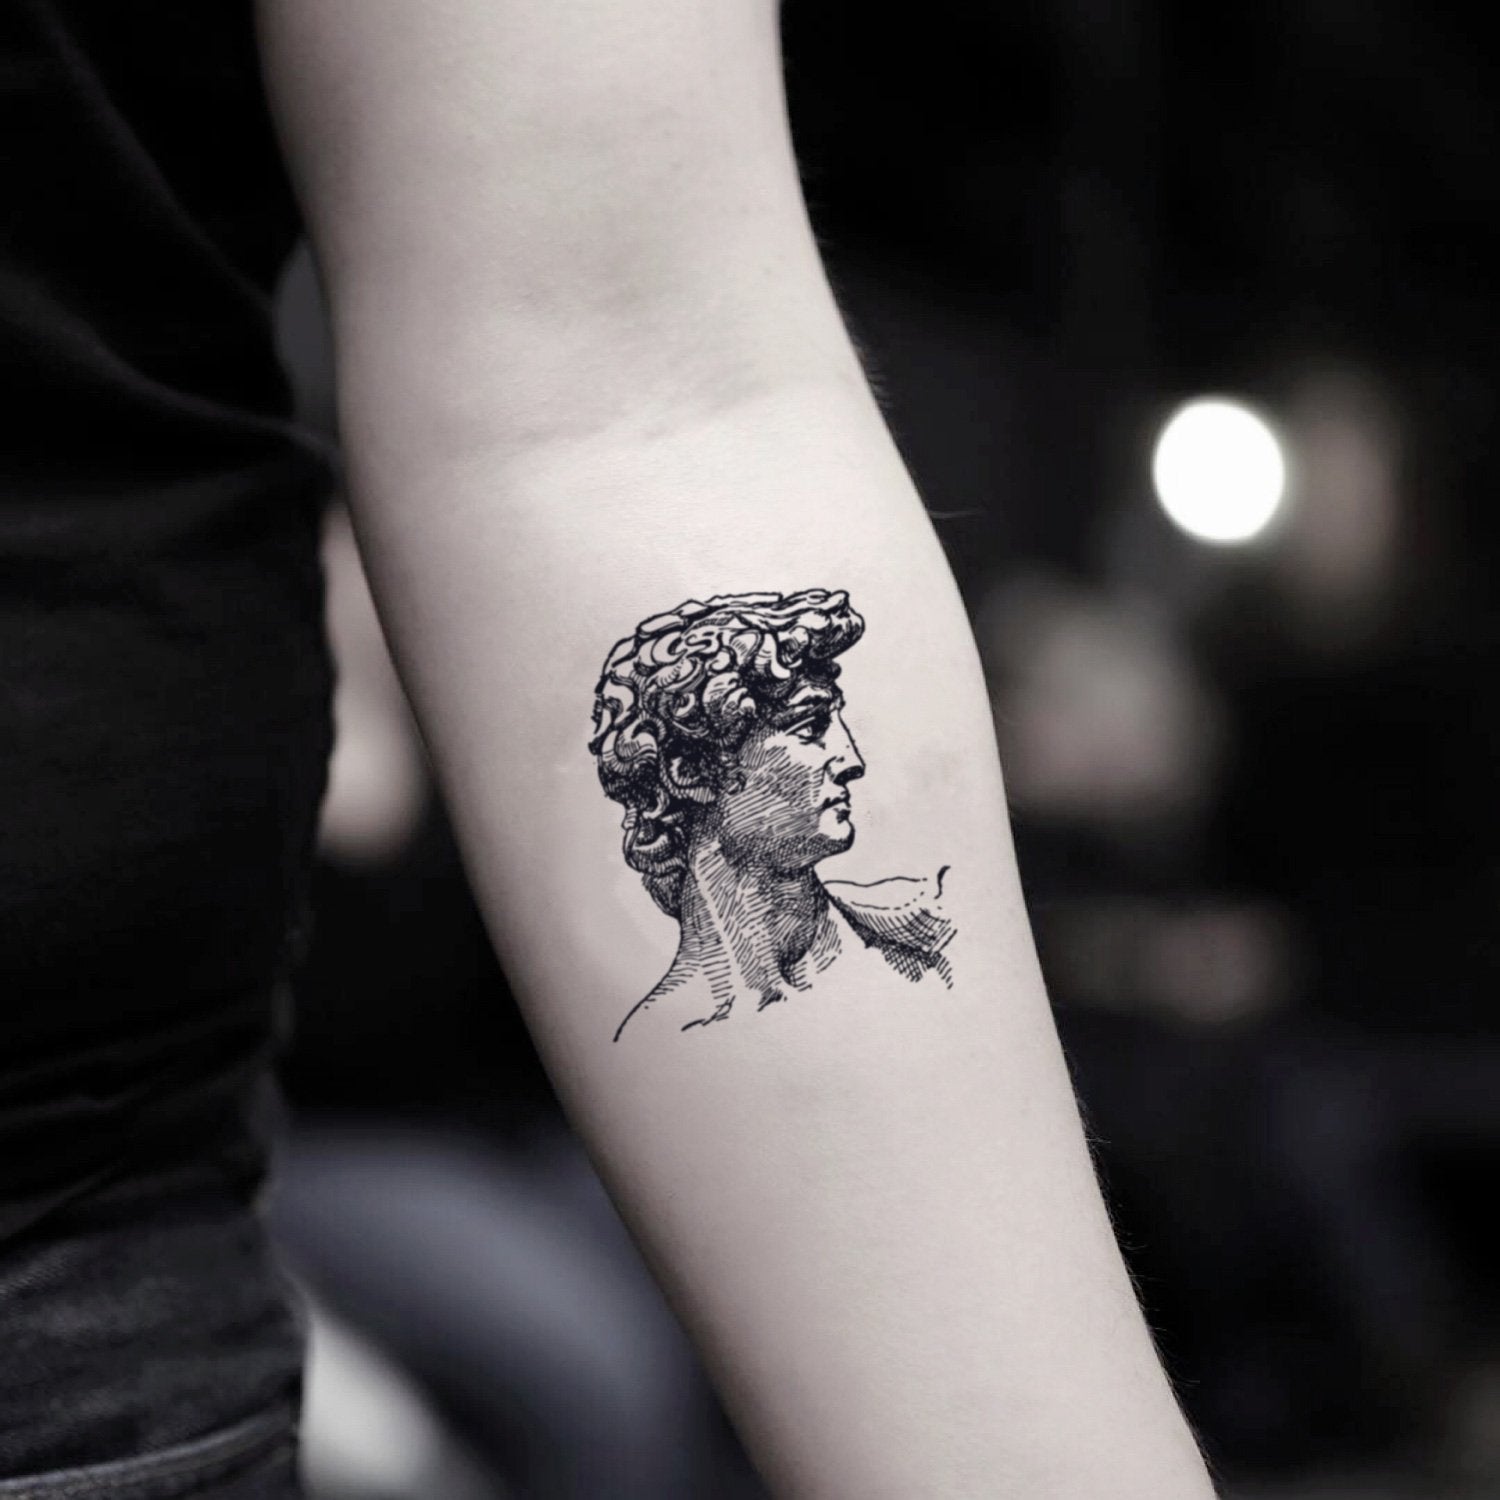 10+ Greek Statue Tattoo Ideas That Will Blow Your Mind! - alexie